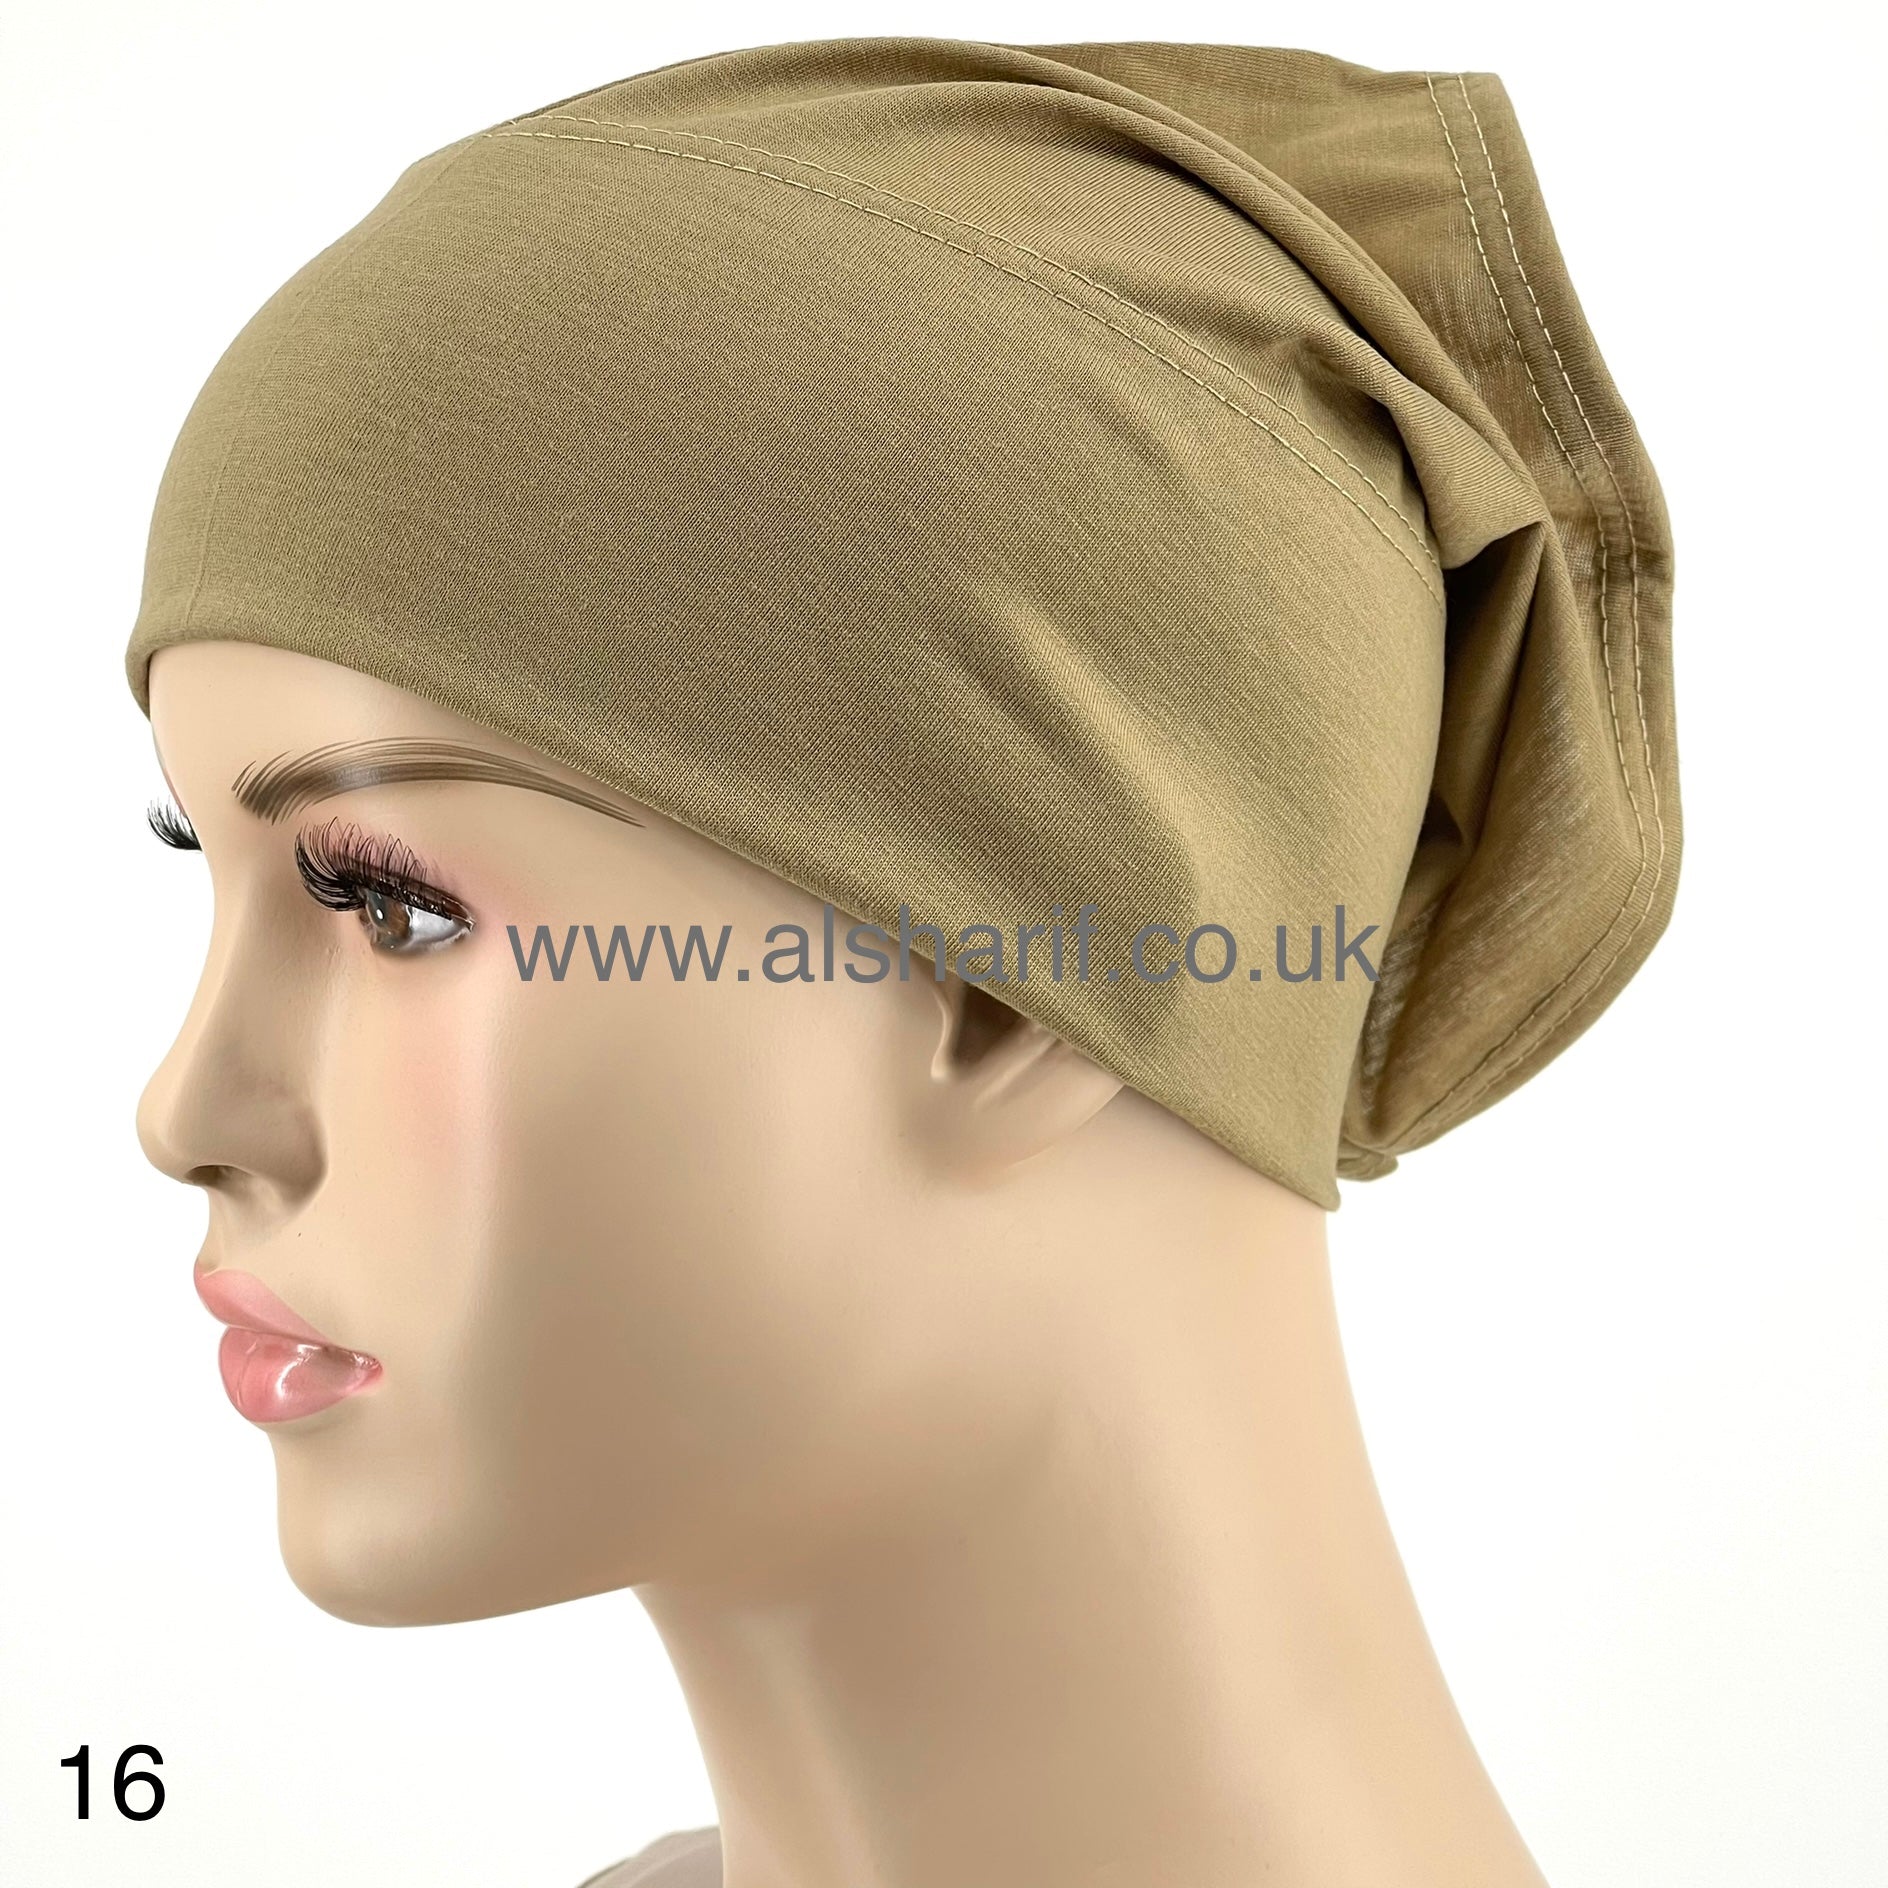 Under Hijab Tube Bonnet Cap #16